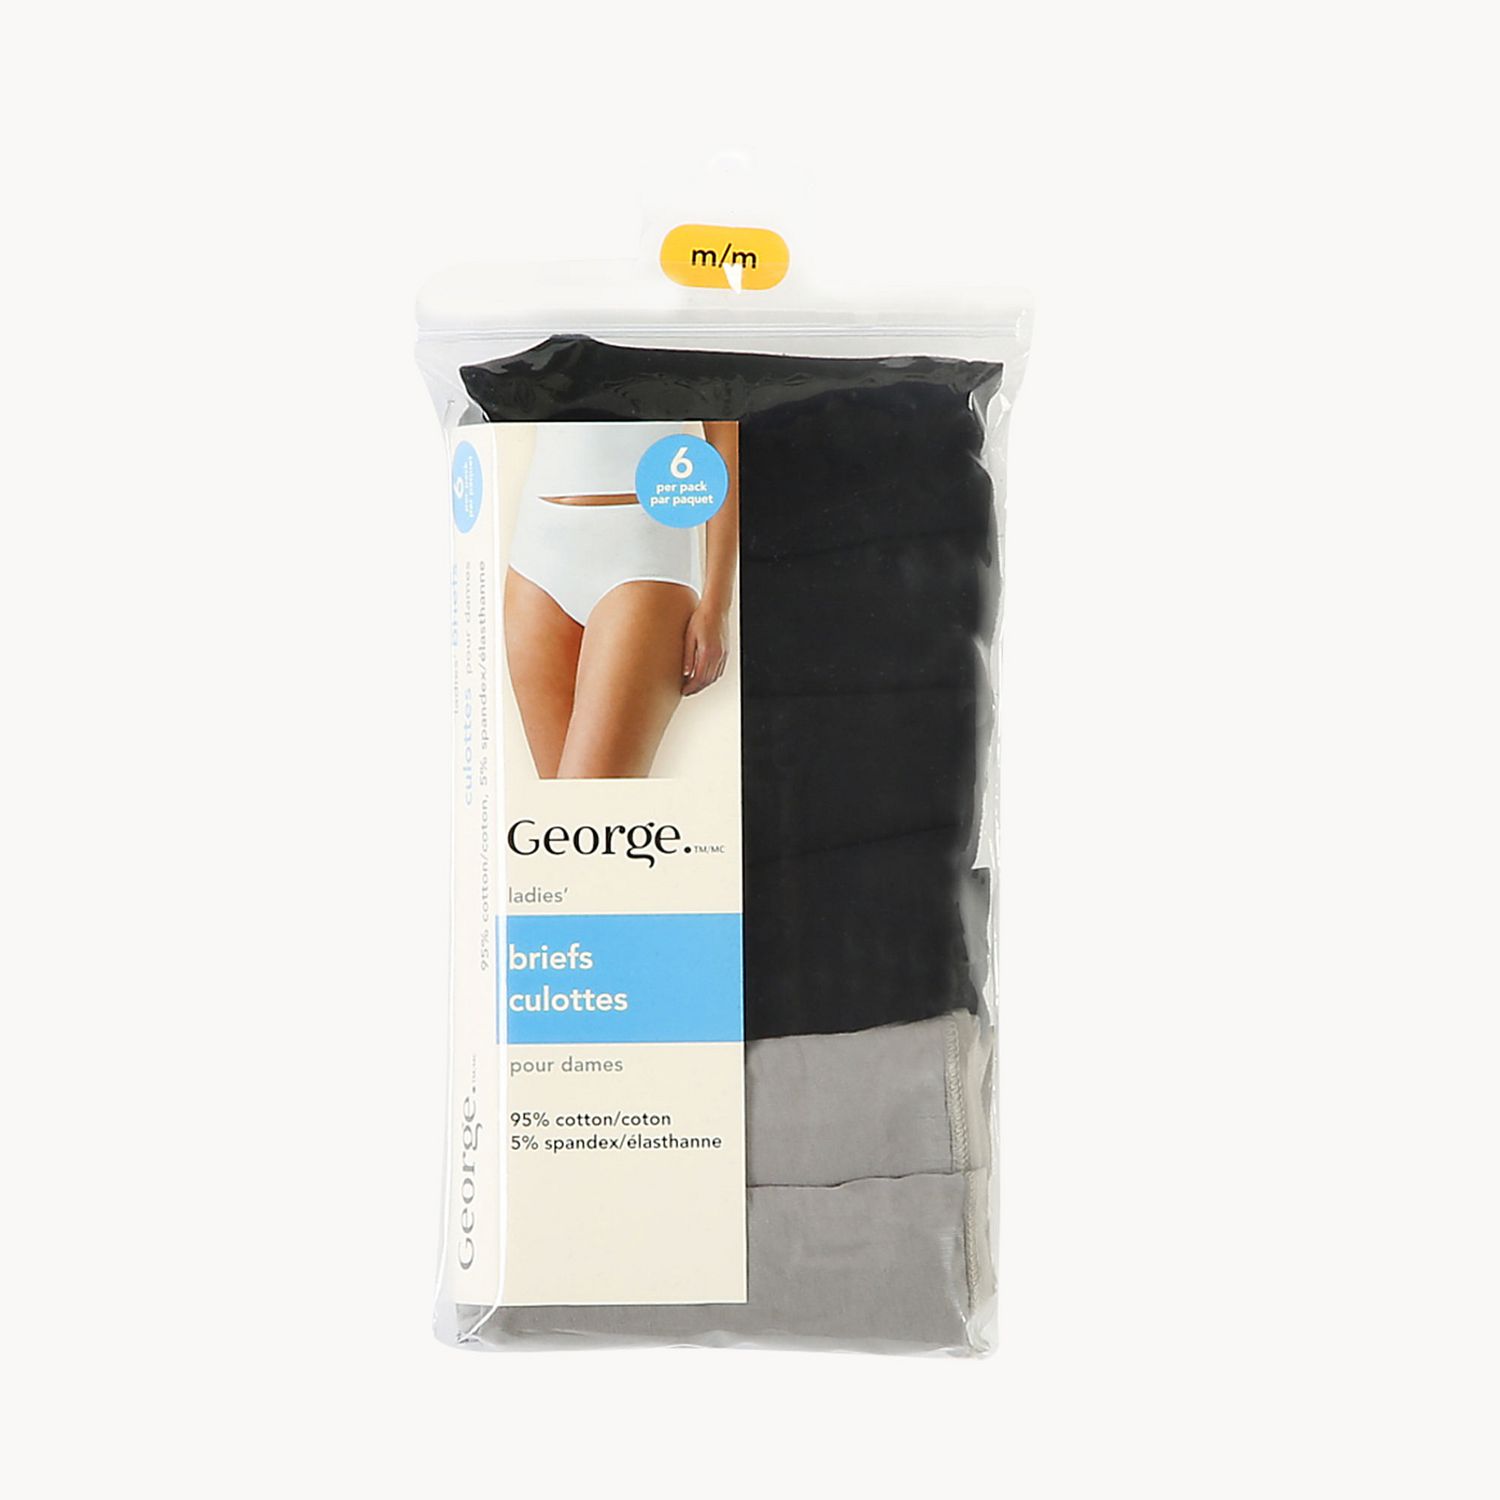 Hanes Originals Women's Stretch Hi Legs, pack of 4, Cool & Breathable, Soft  & Comfy 